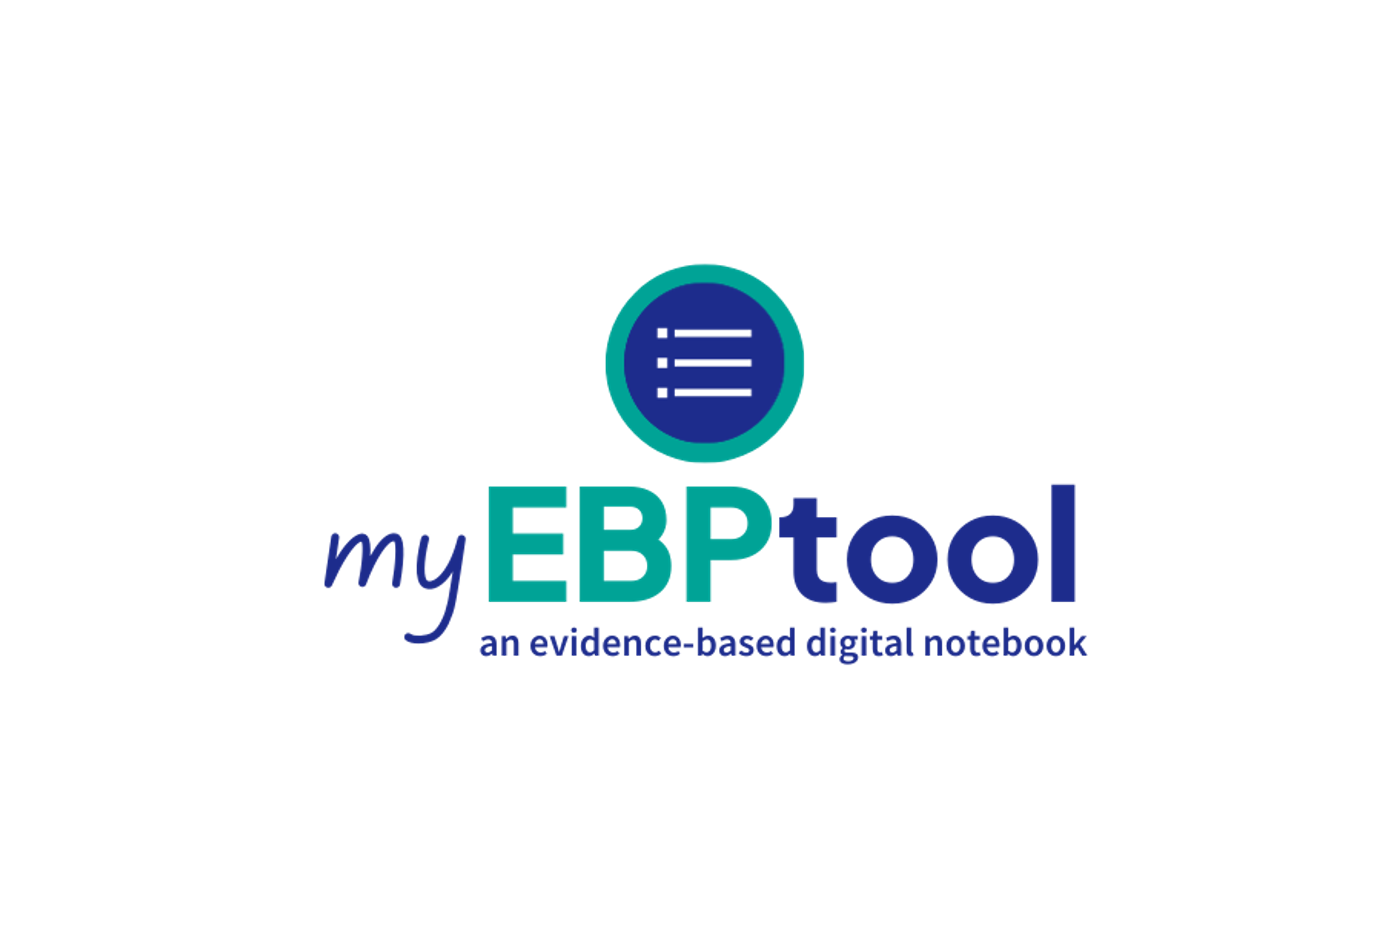 myEBPtool, an evidence-based digital notebook